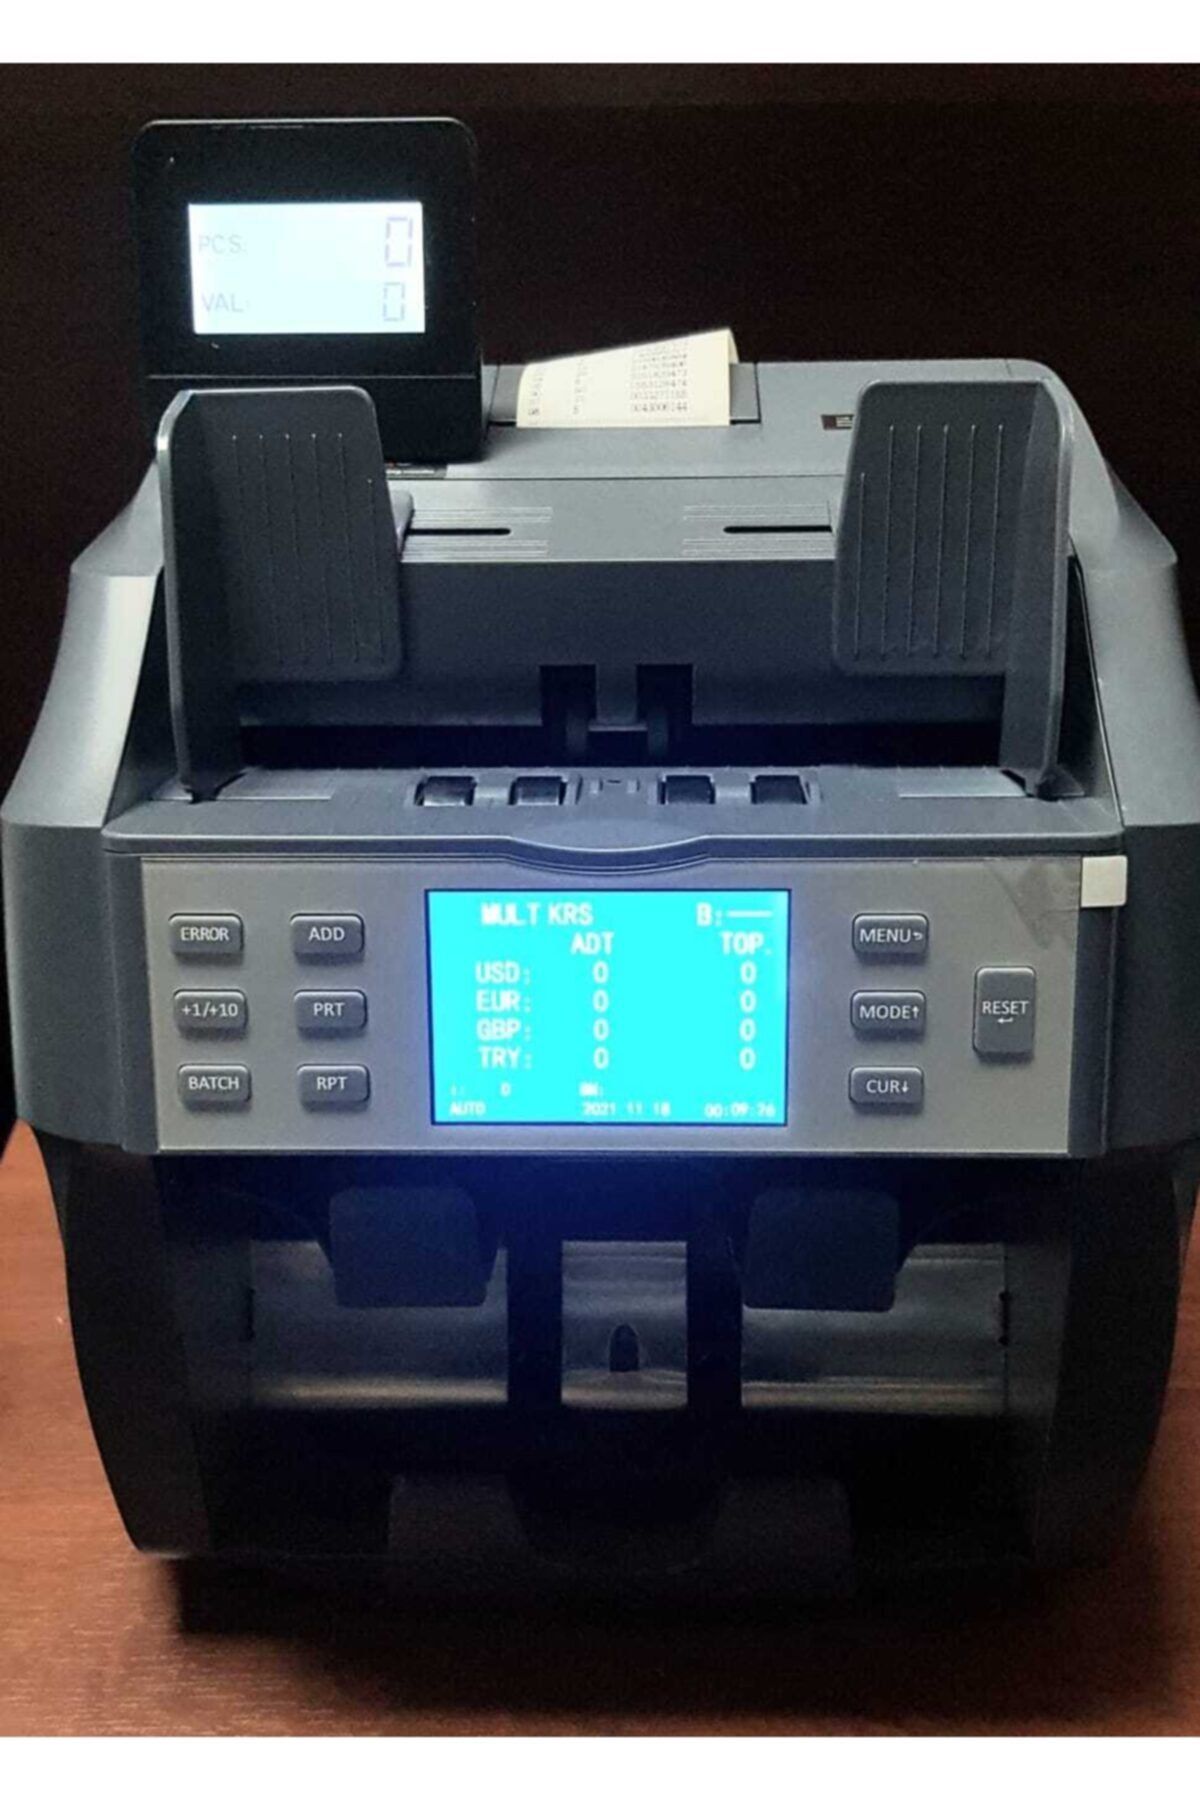 Sigma Sentom 4025 Dokunmatik Ekran Sahte Kontrollü Seri No Printerli Aynı Anda 4 Para Birimi Sayım